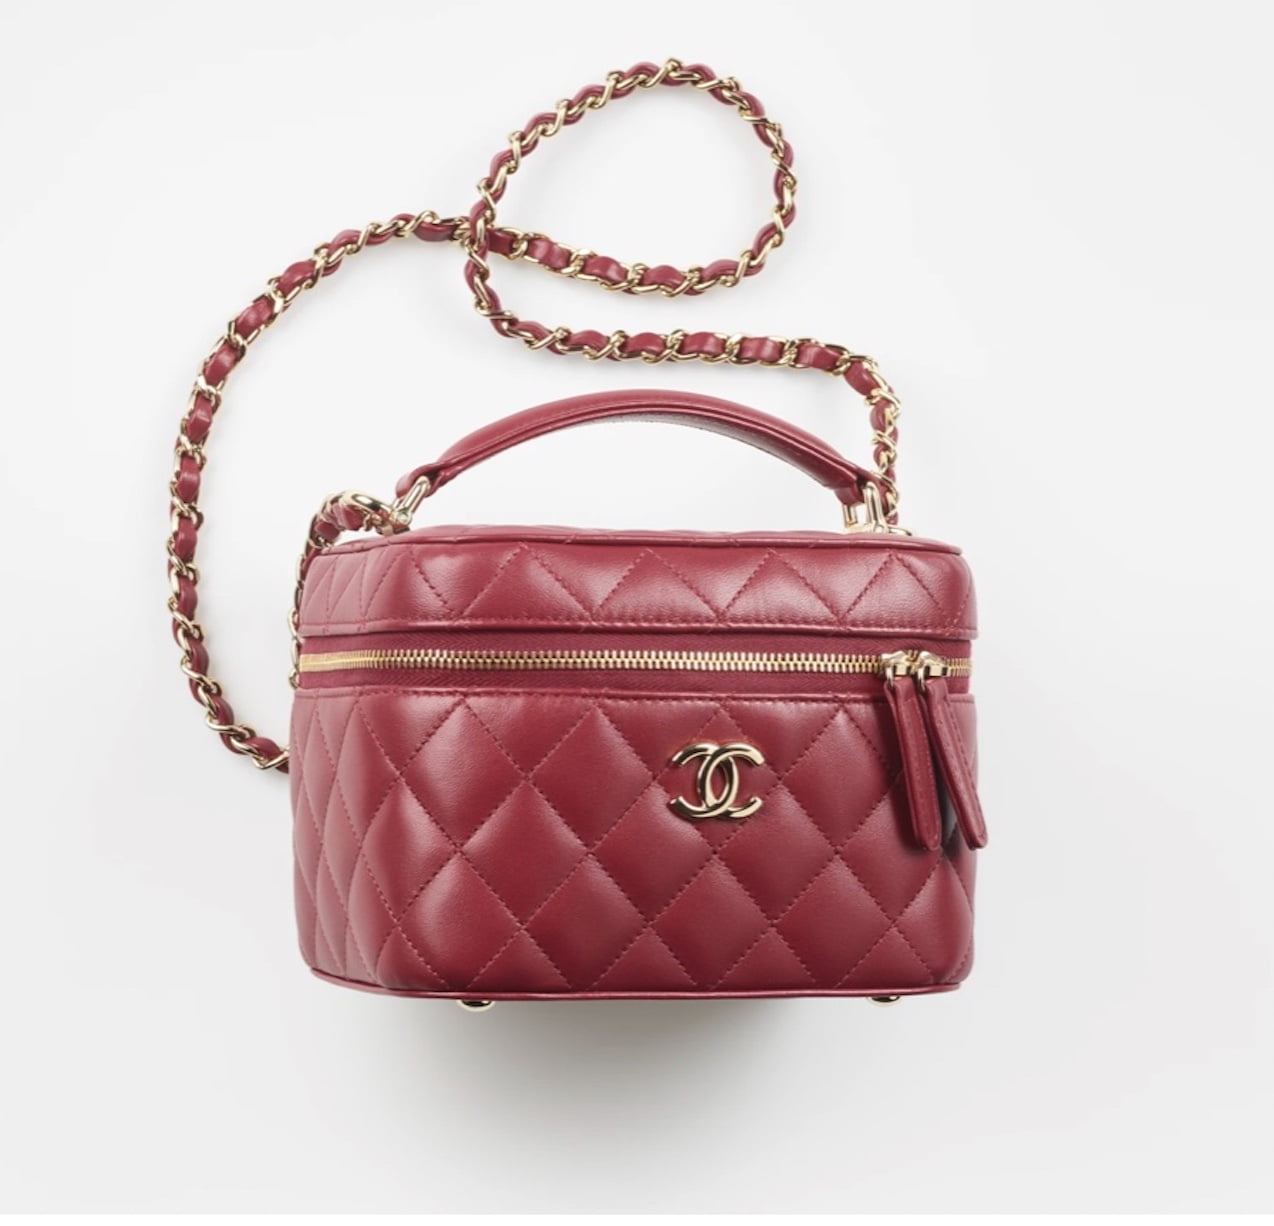 Chanel #chanel #chanelbag #bag #niche #nichememe #clothes - Artist